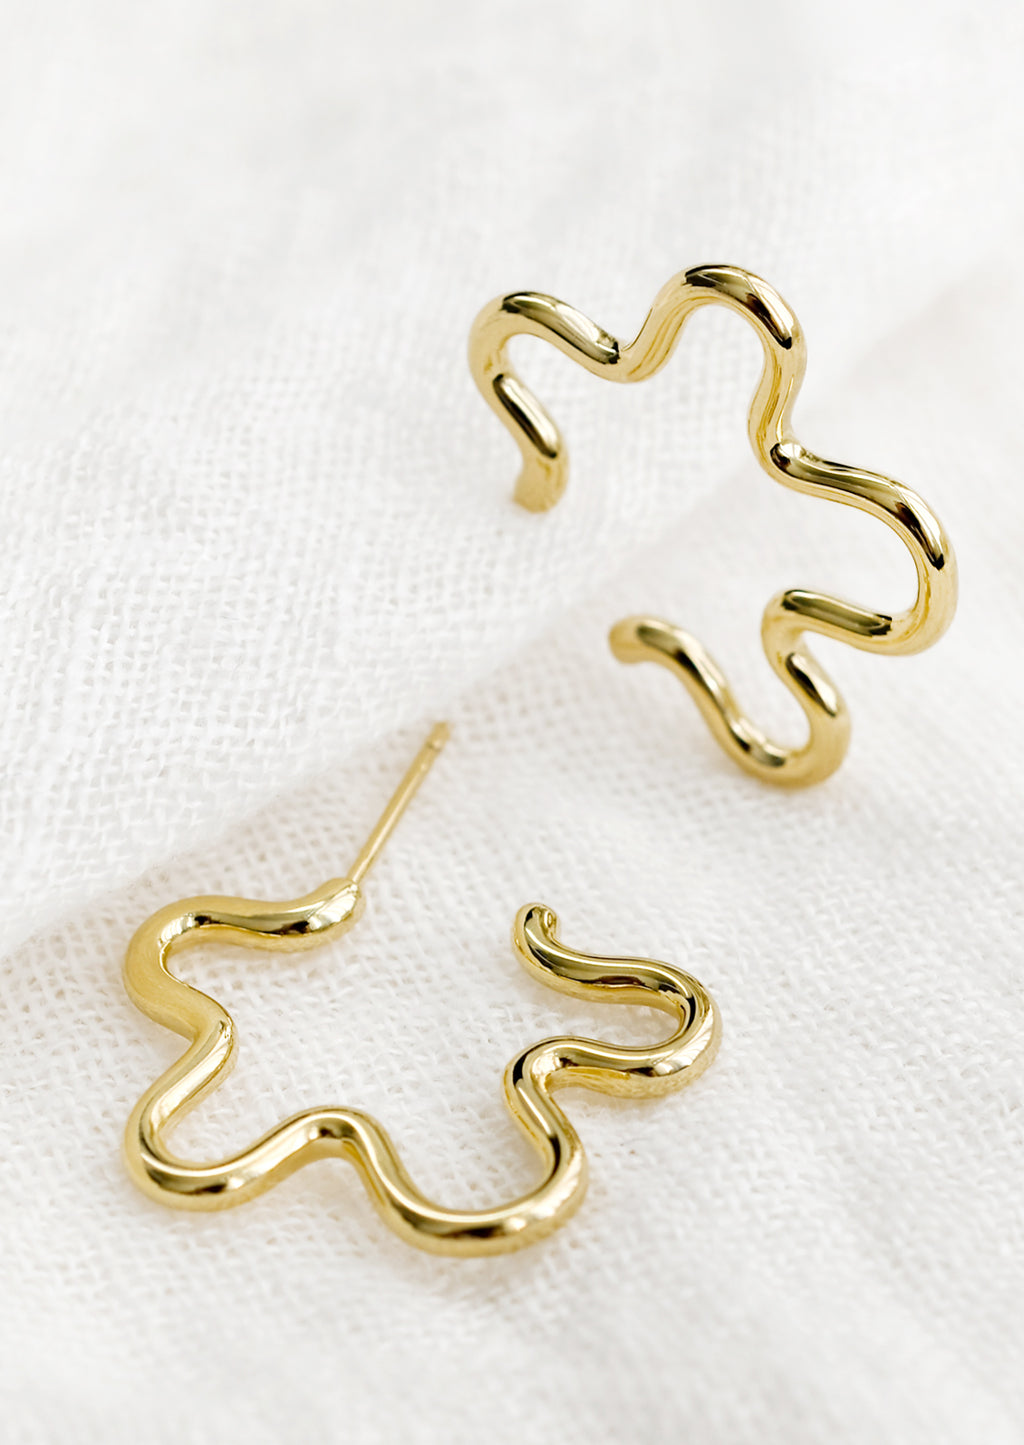 2: A pair of gold flower outline earrings.